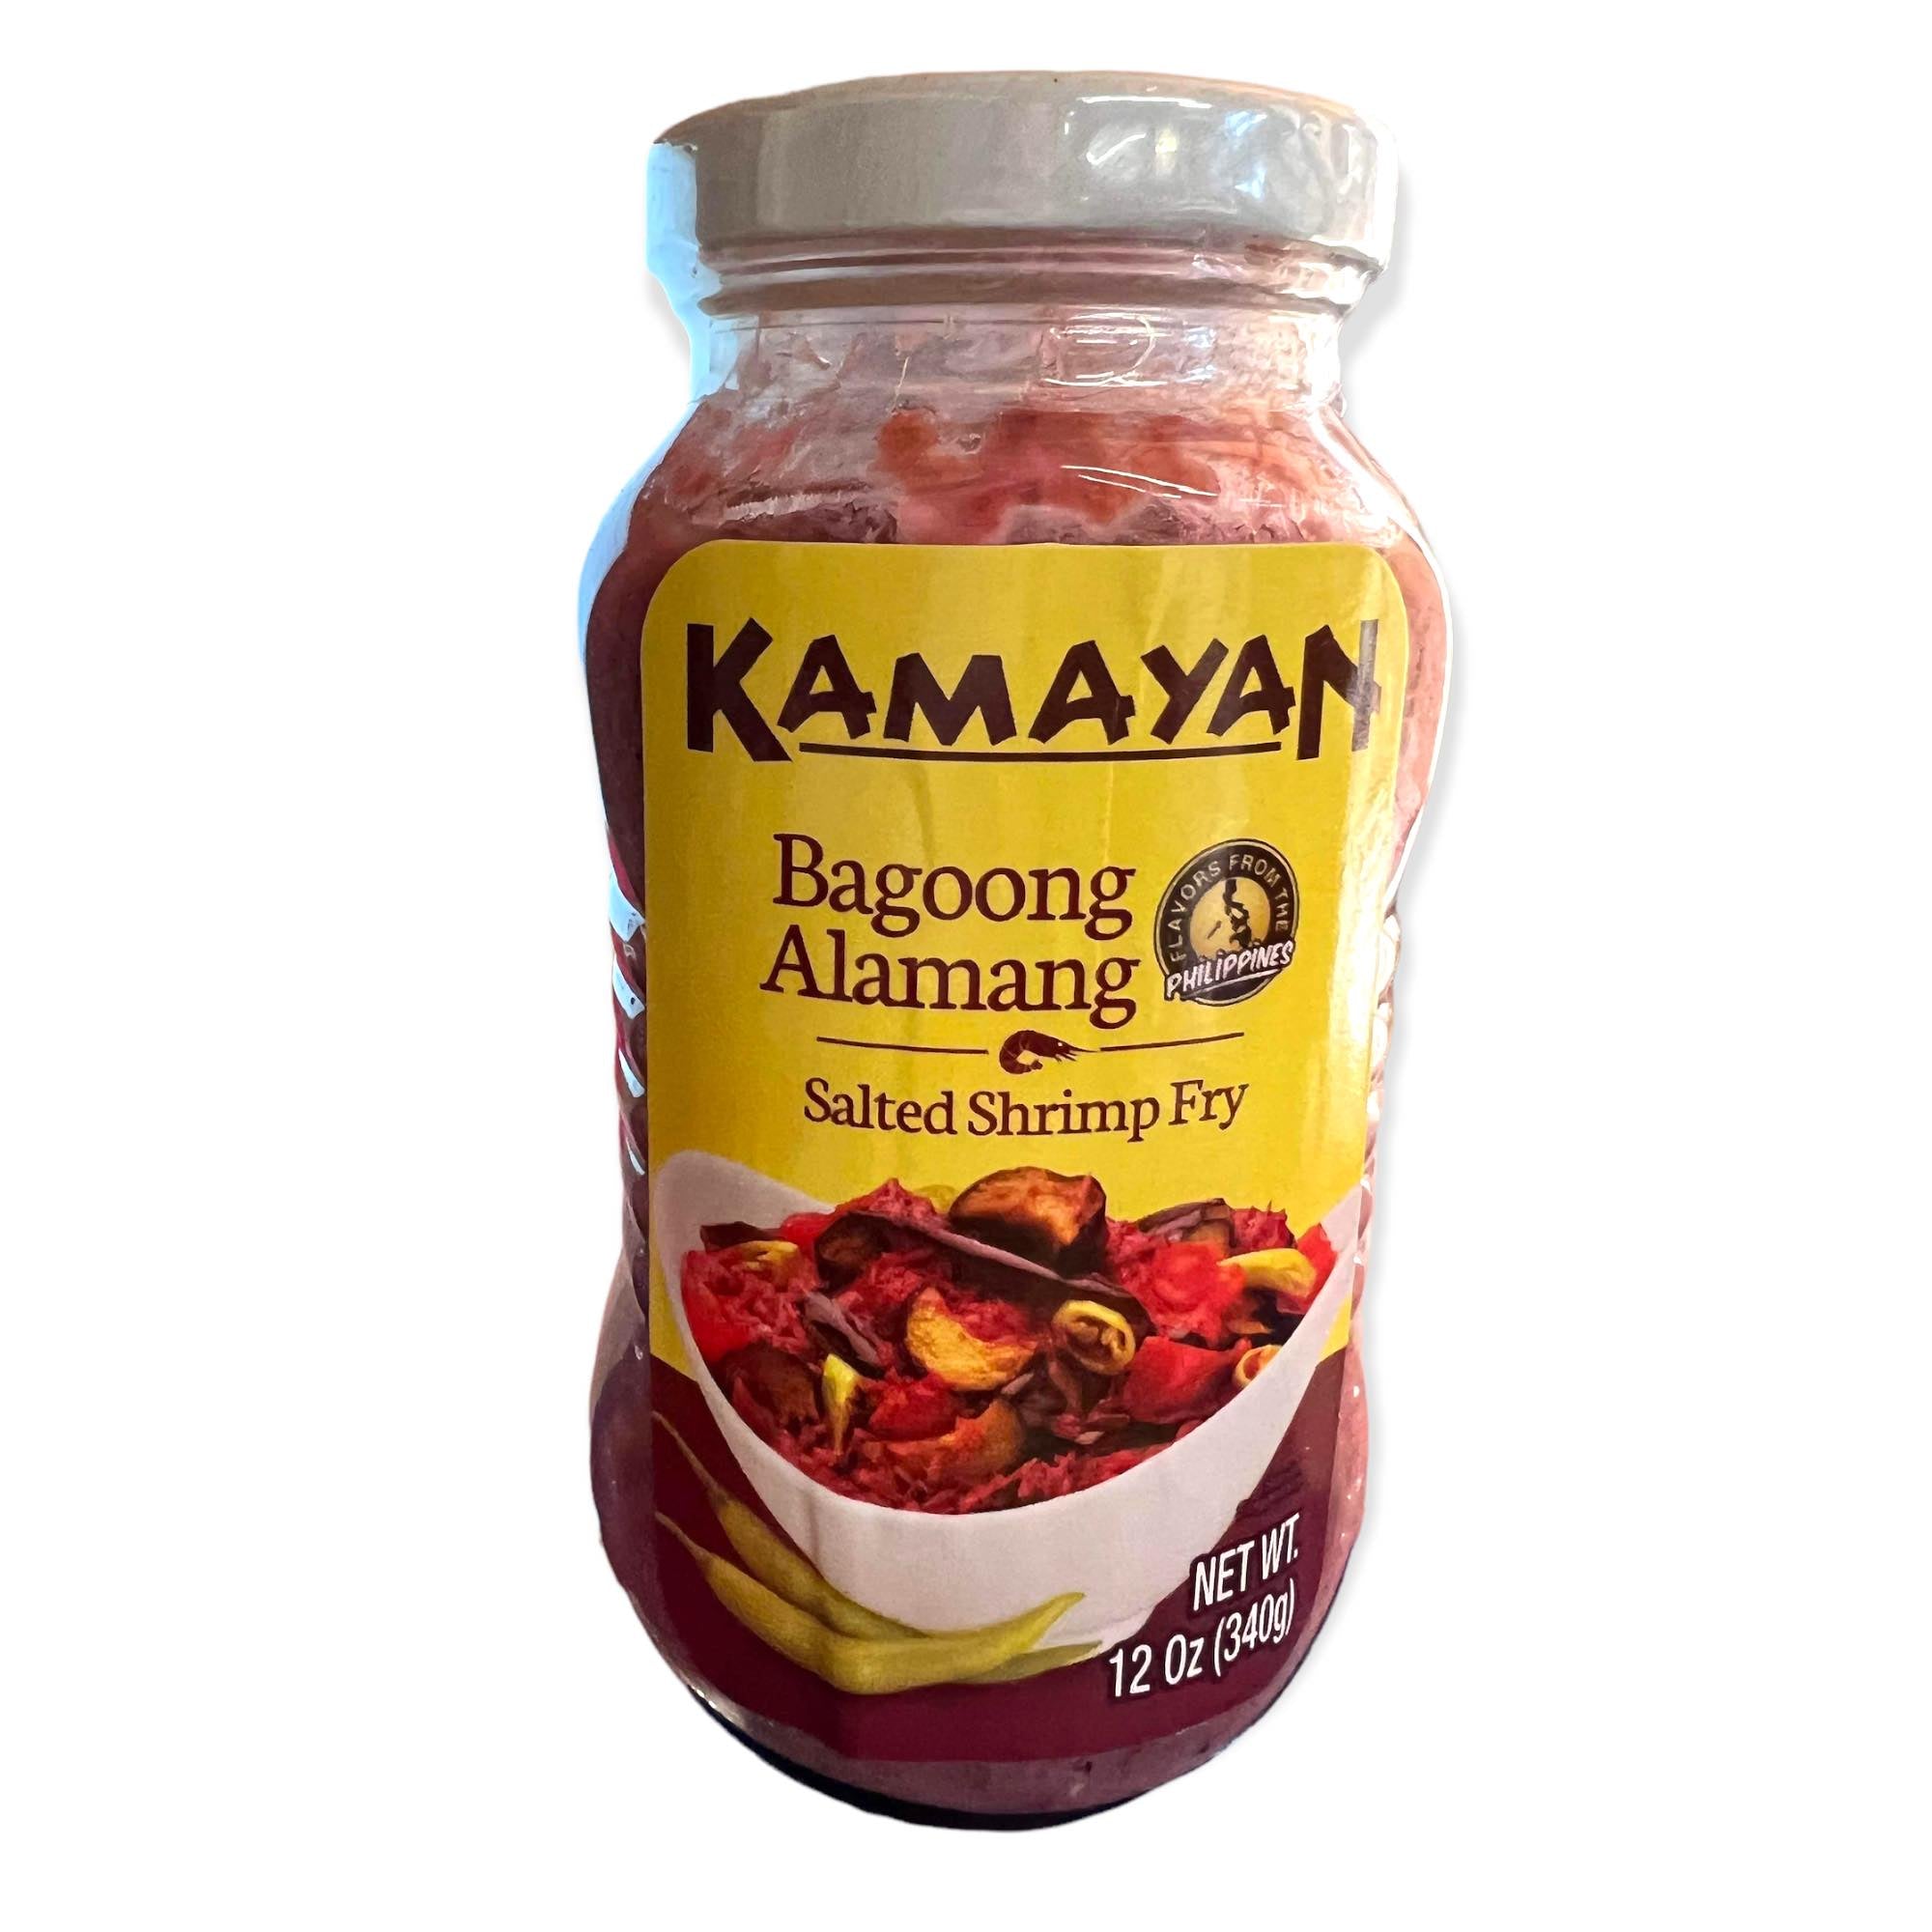 Kamayan - Bagoong Alamang Salted Shrimp Fry - 12OZ